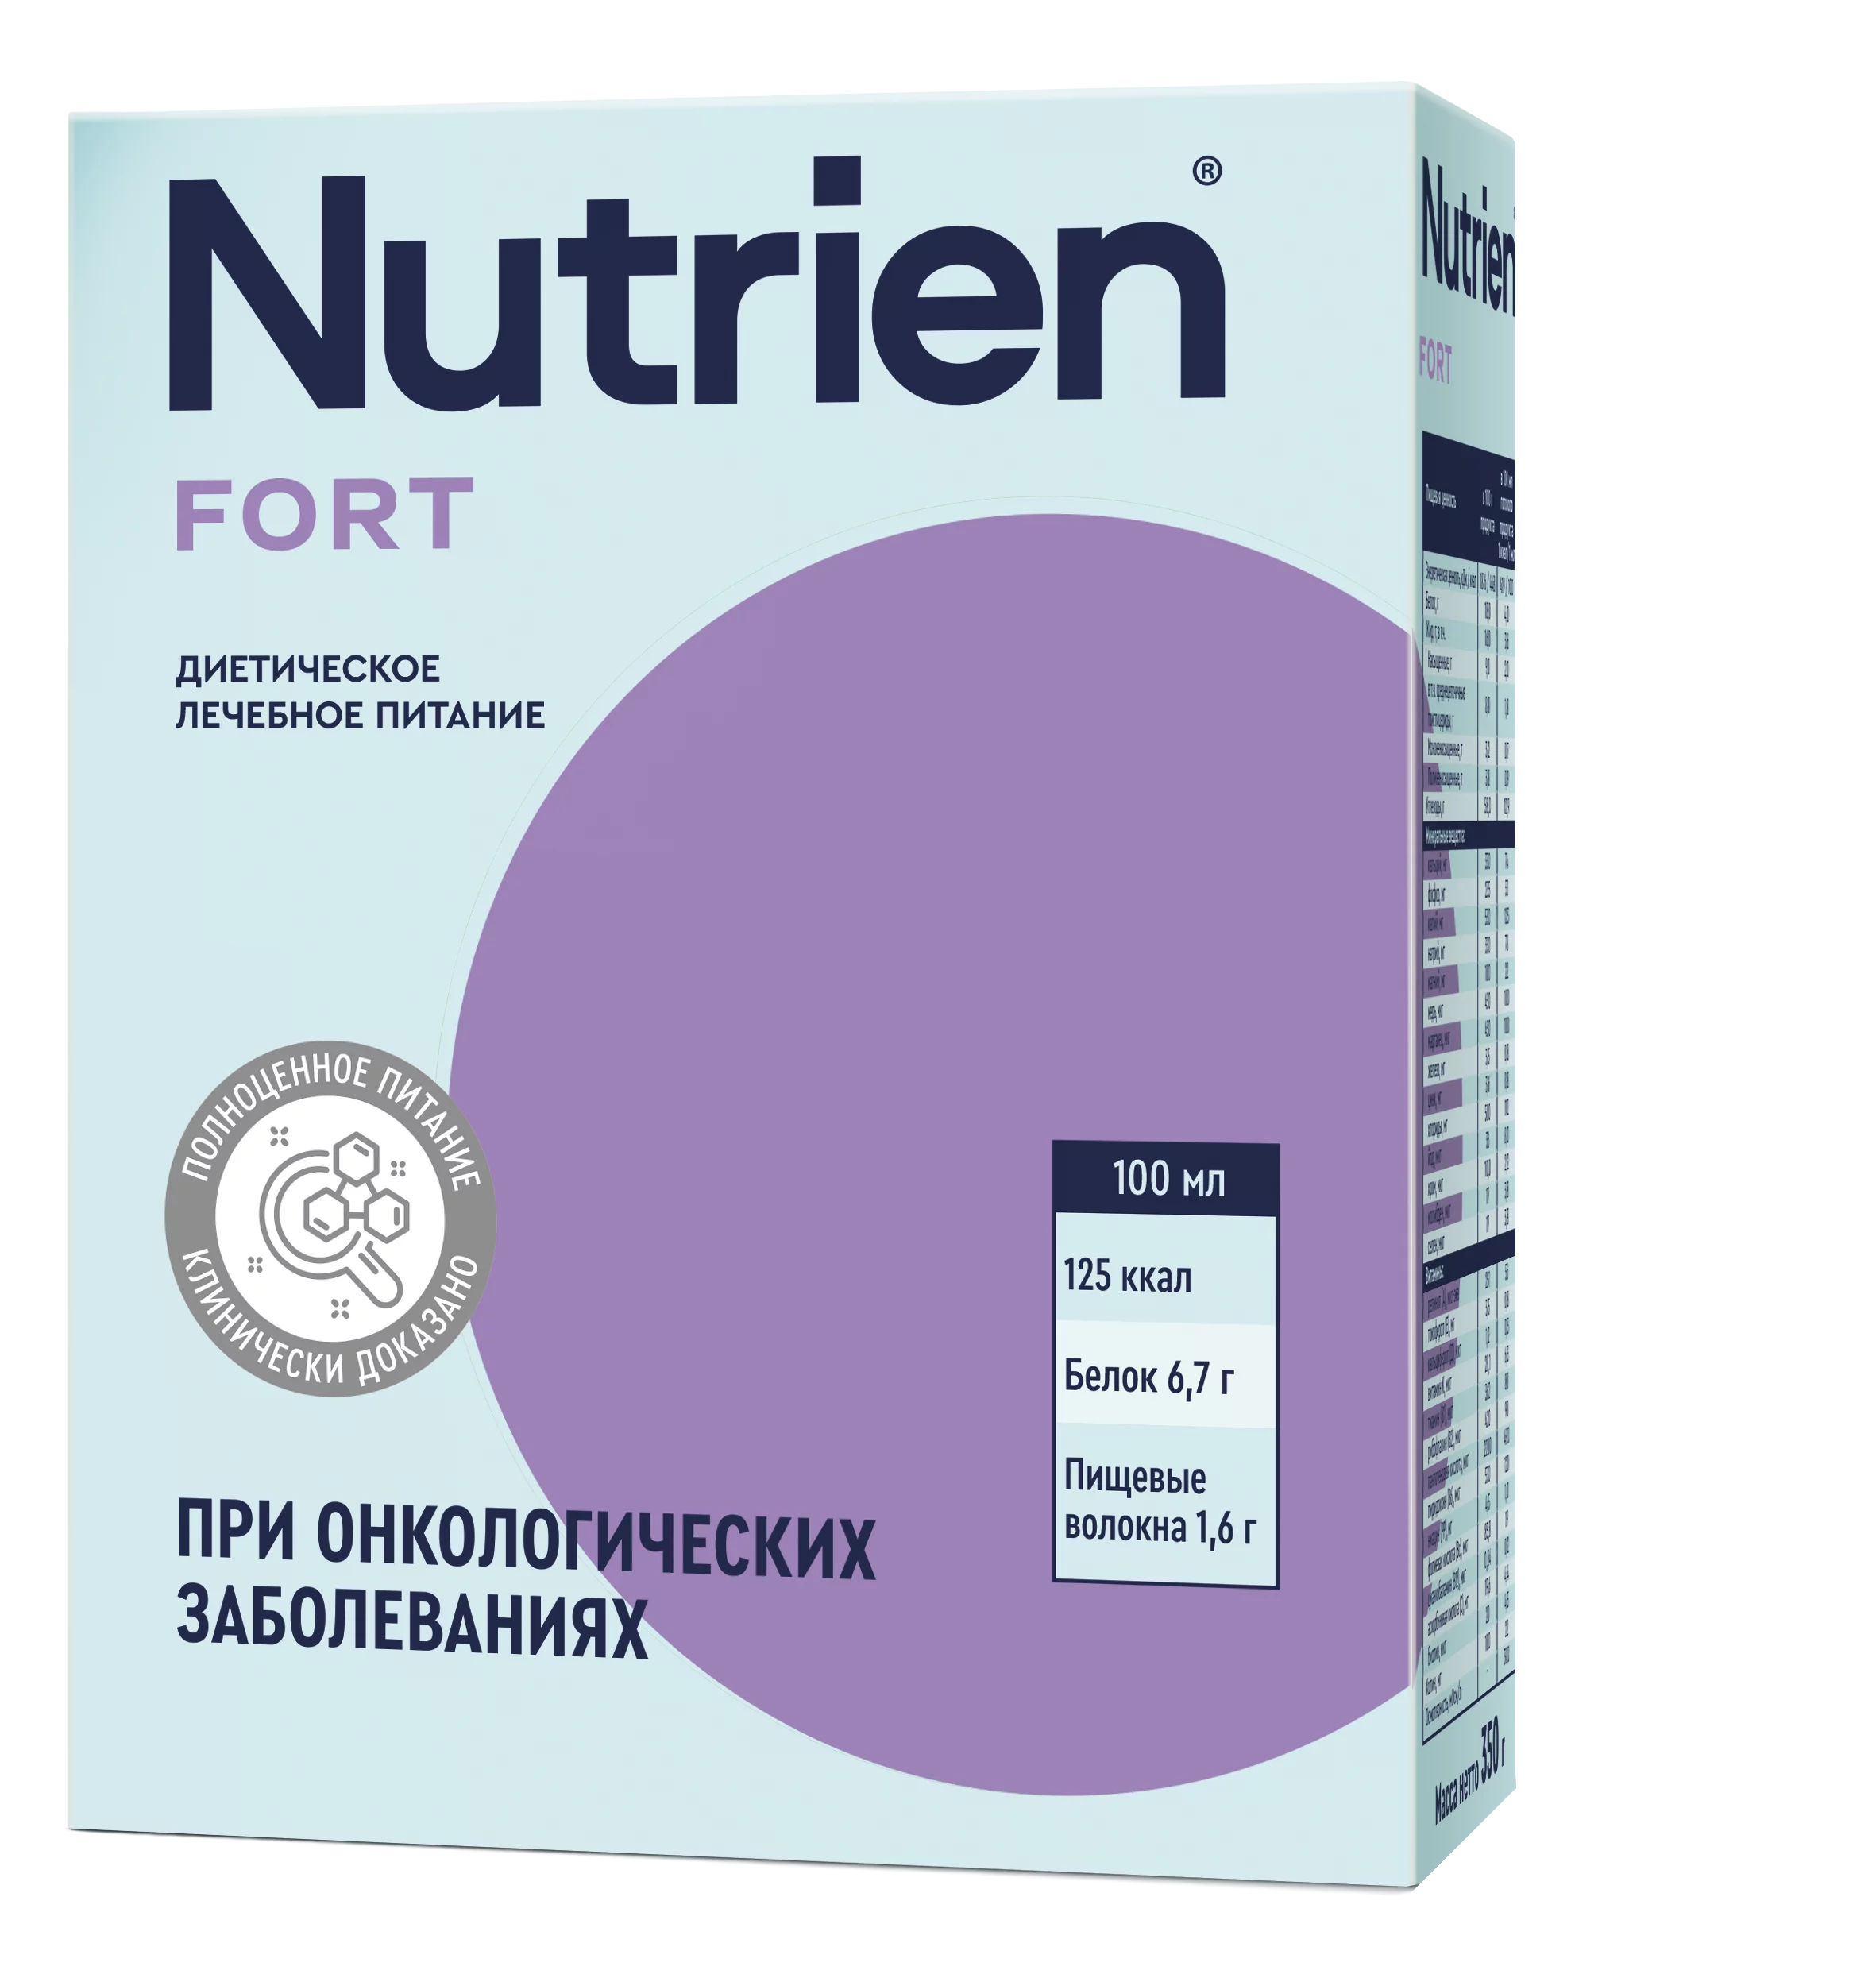 Nutrien Fort - 1